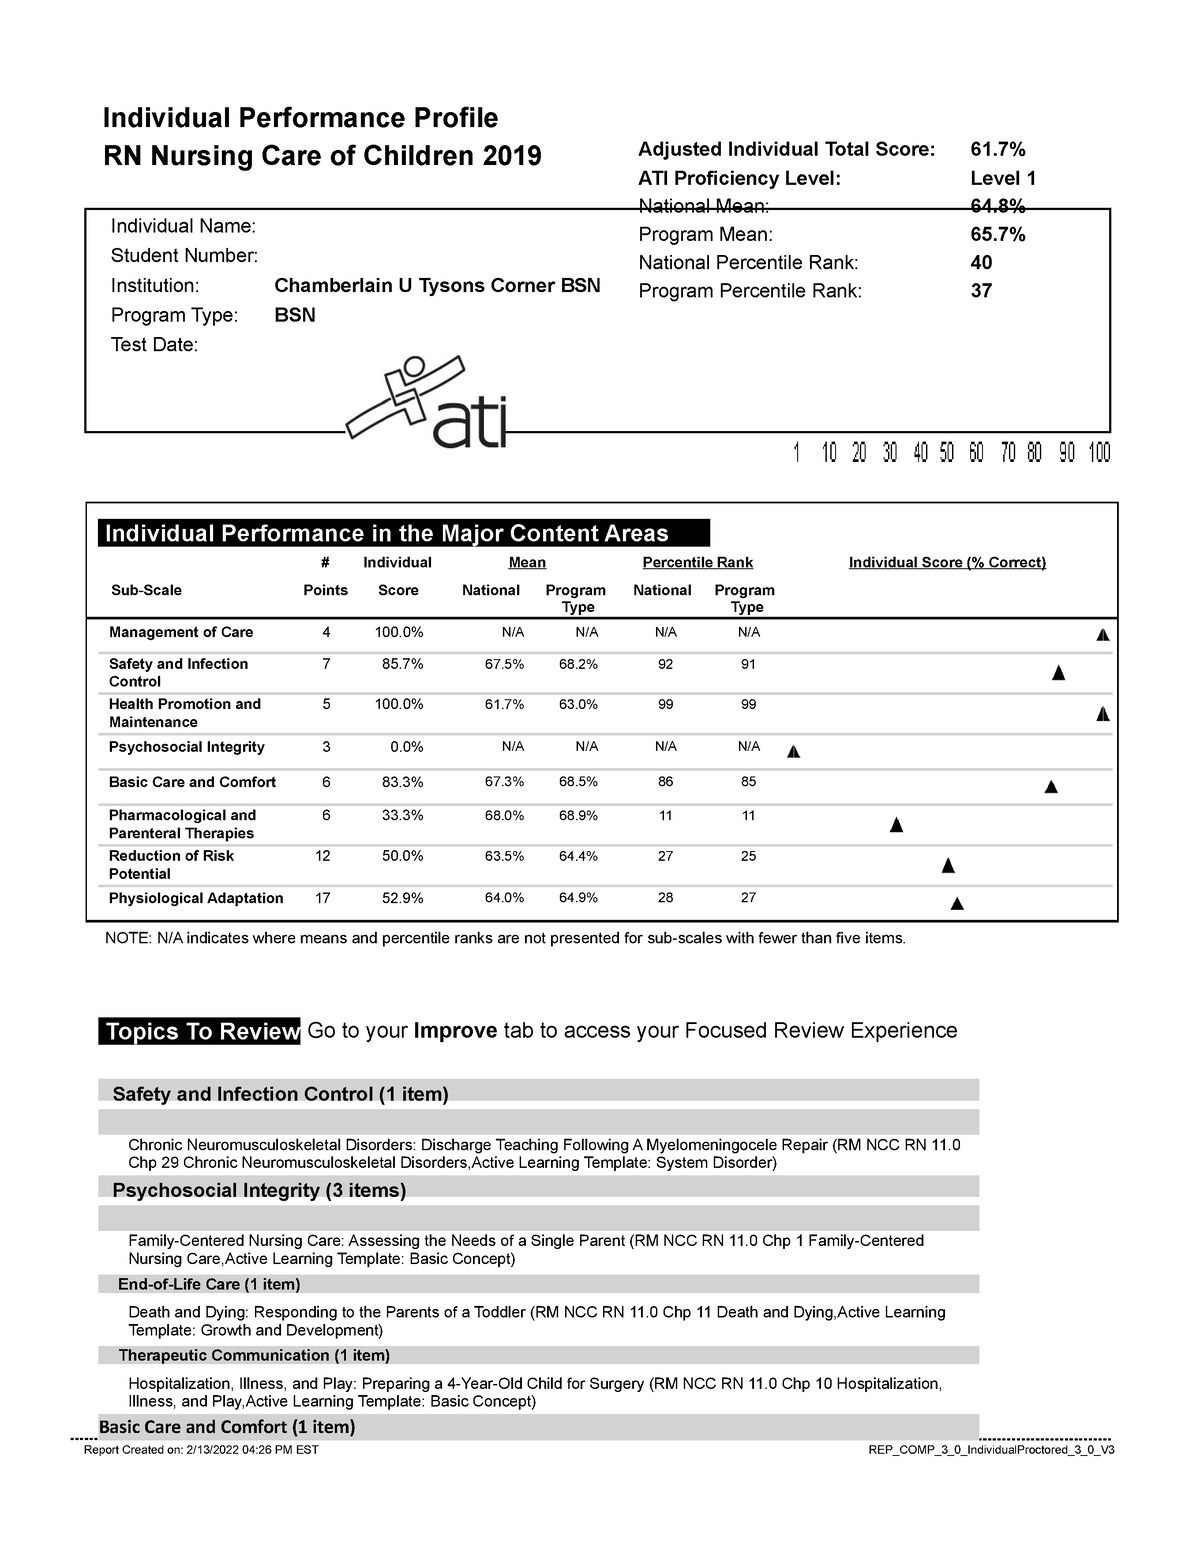 ATI practice Exam remediation report Basic Care and Comfort (1 item